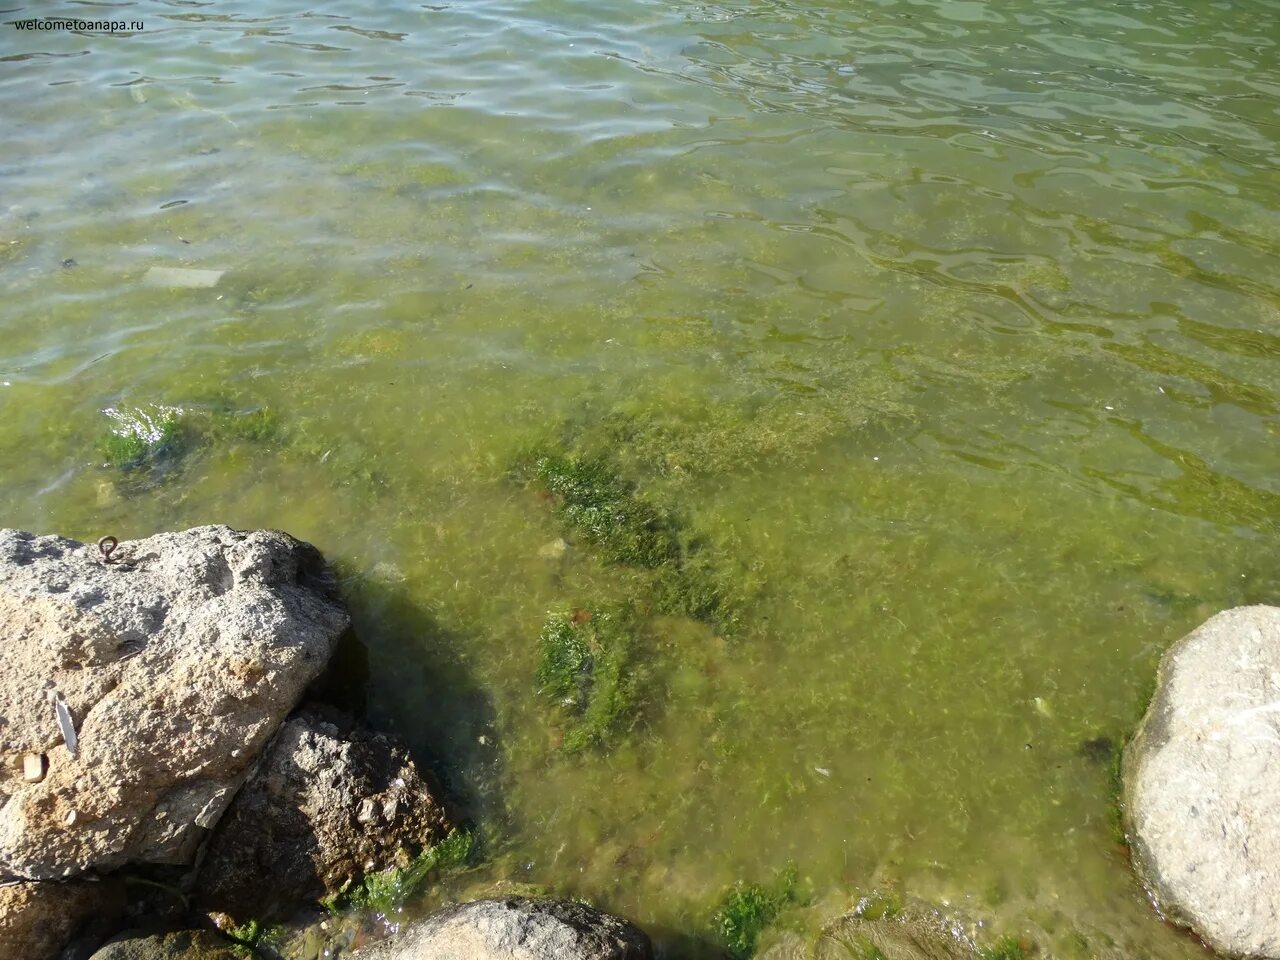 Водоросли в анапе. Черное море цветет Анапа. Цветение водорослей в Анапе. Витязево море цветет. Анапа зеленая вода.